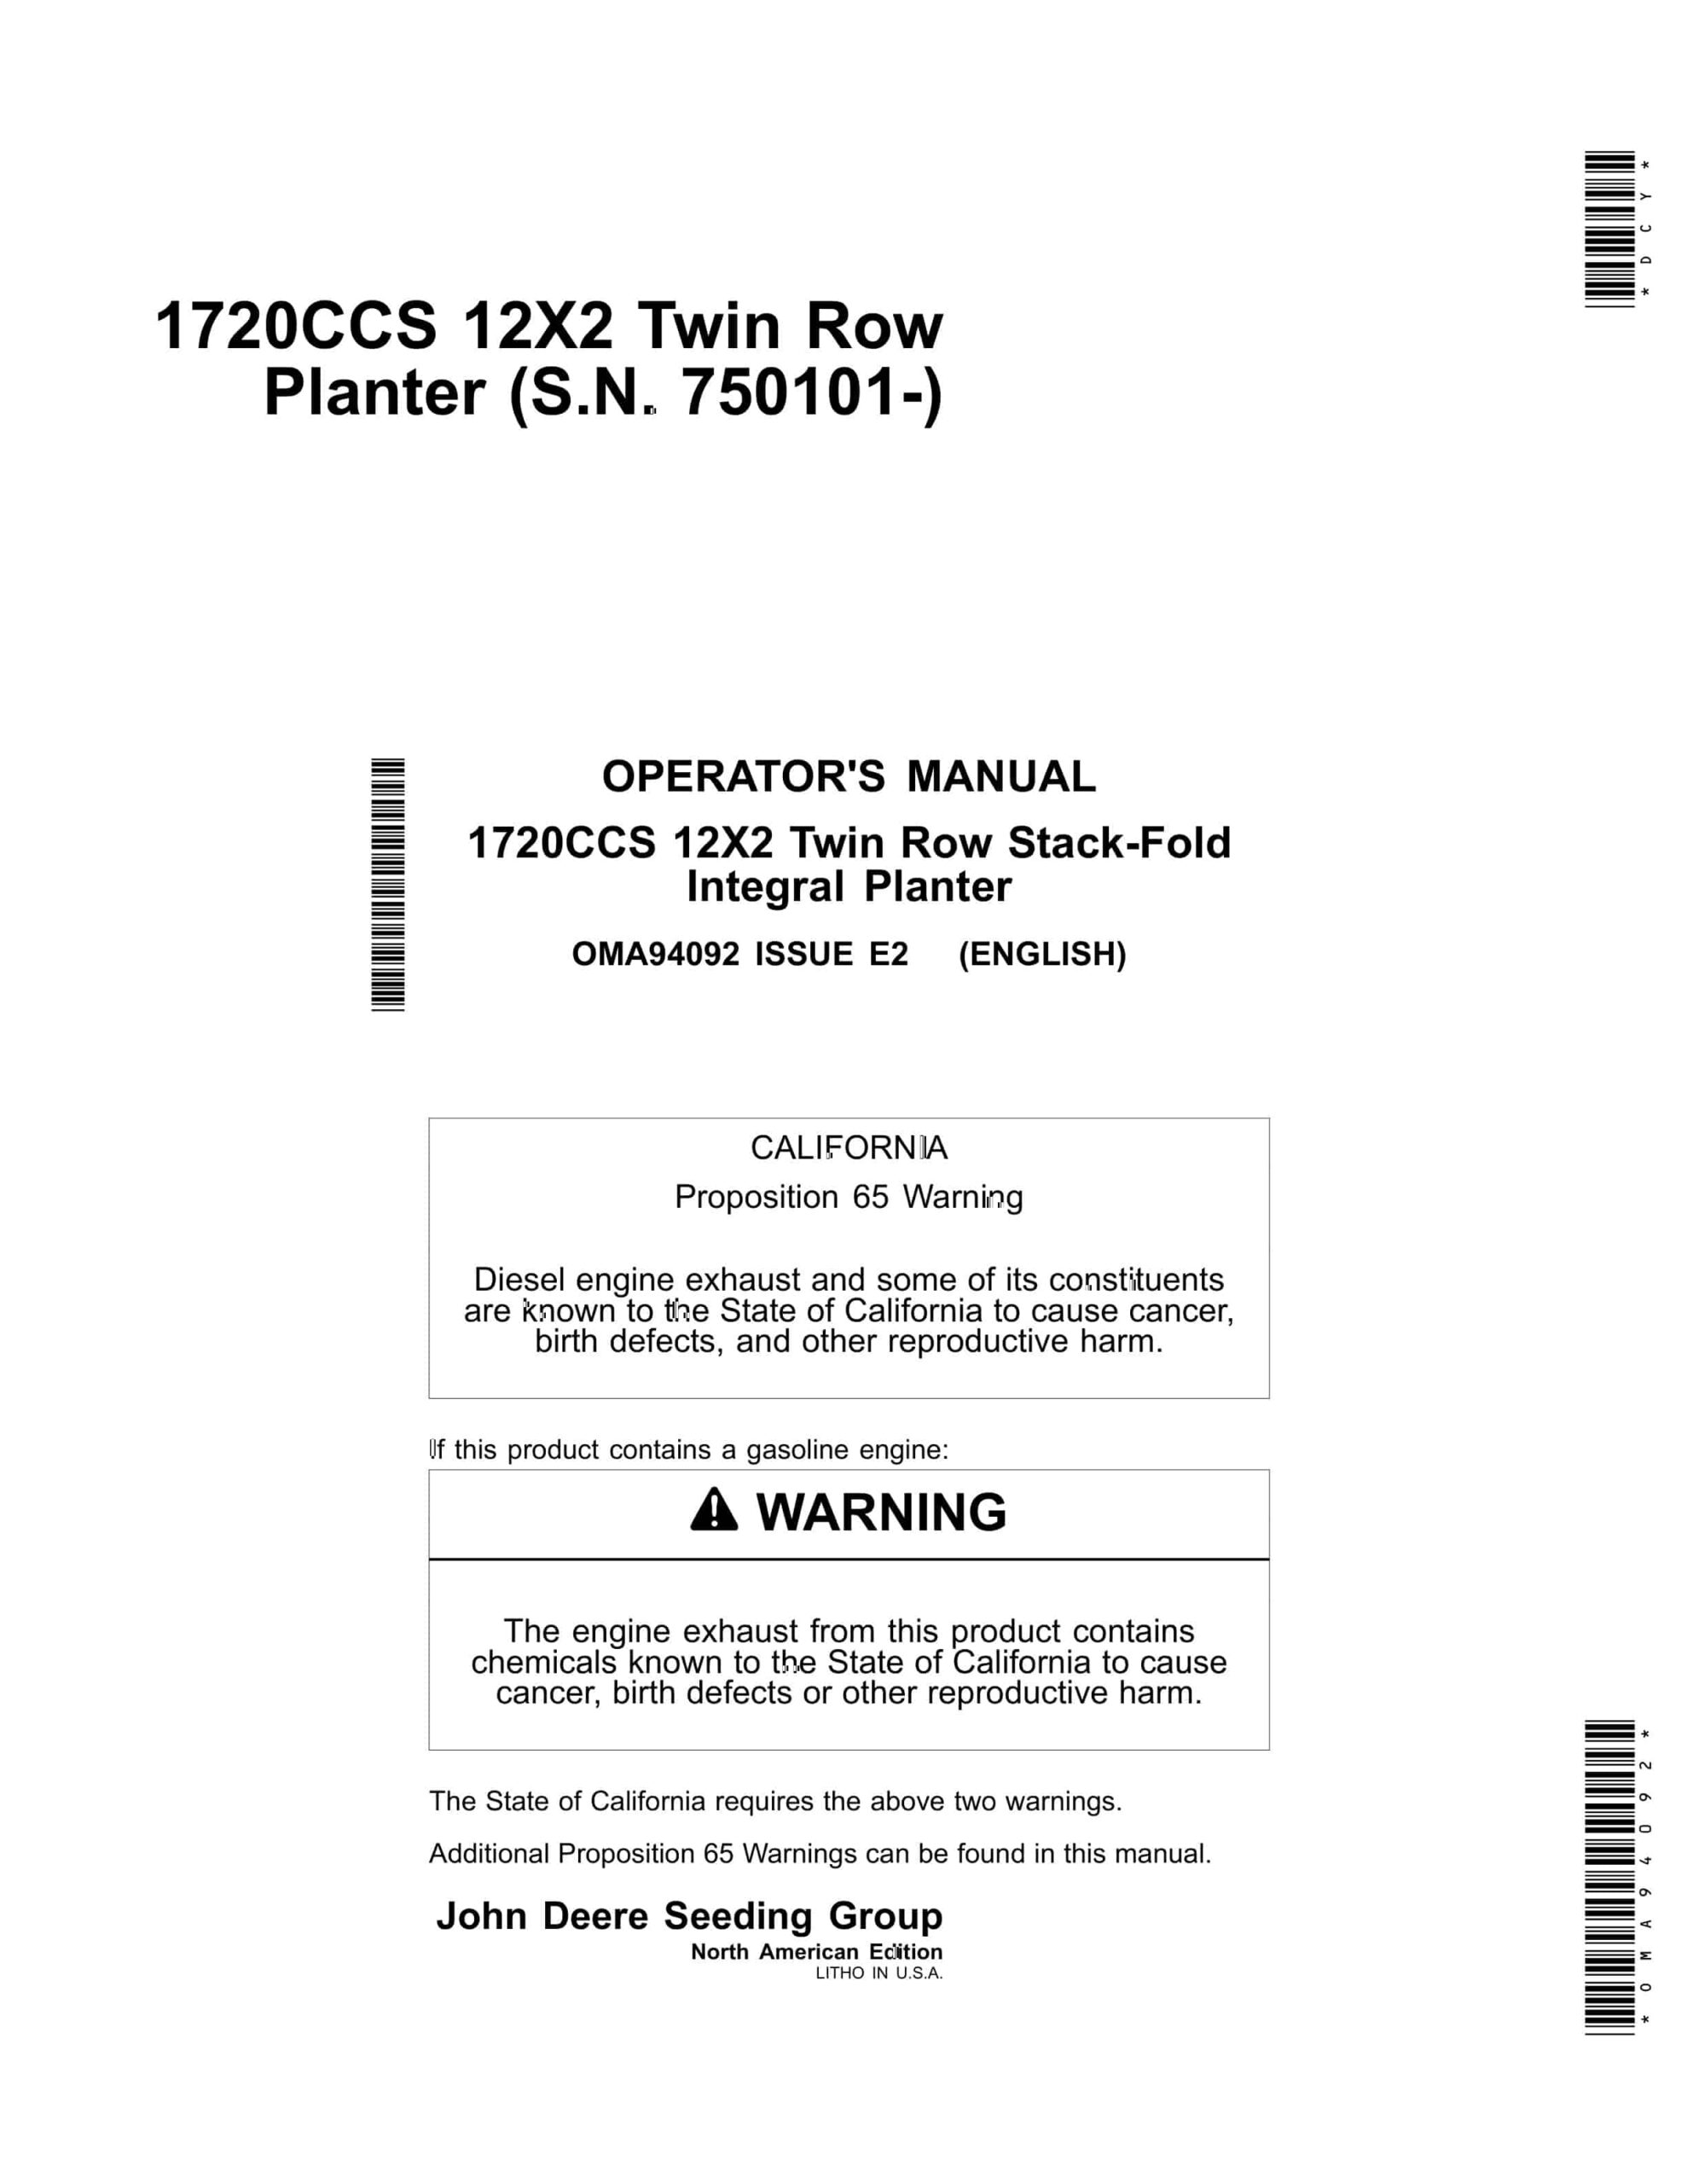 John Deere 1720CCS 12X2 Twin Row Stack-Fold Integral Planter Operator Manual OMA94092-1